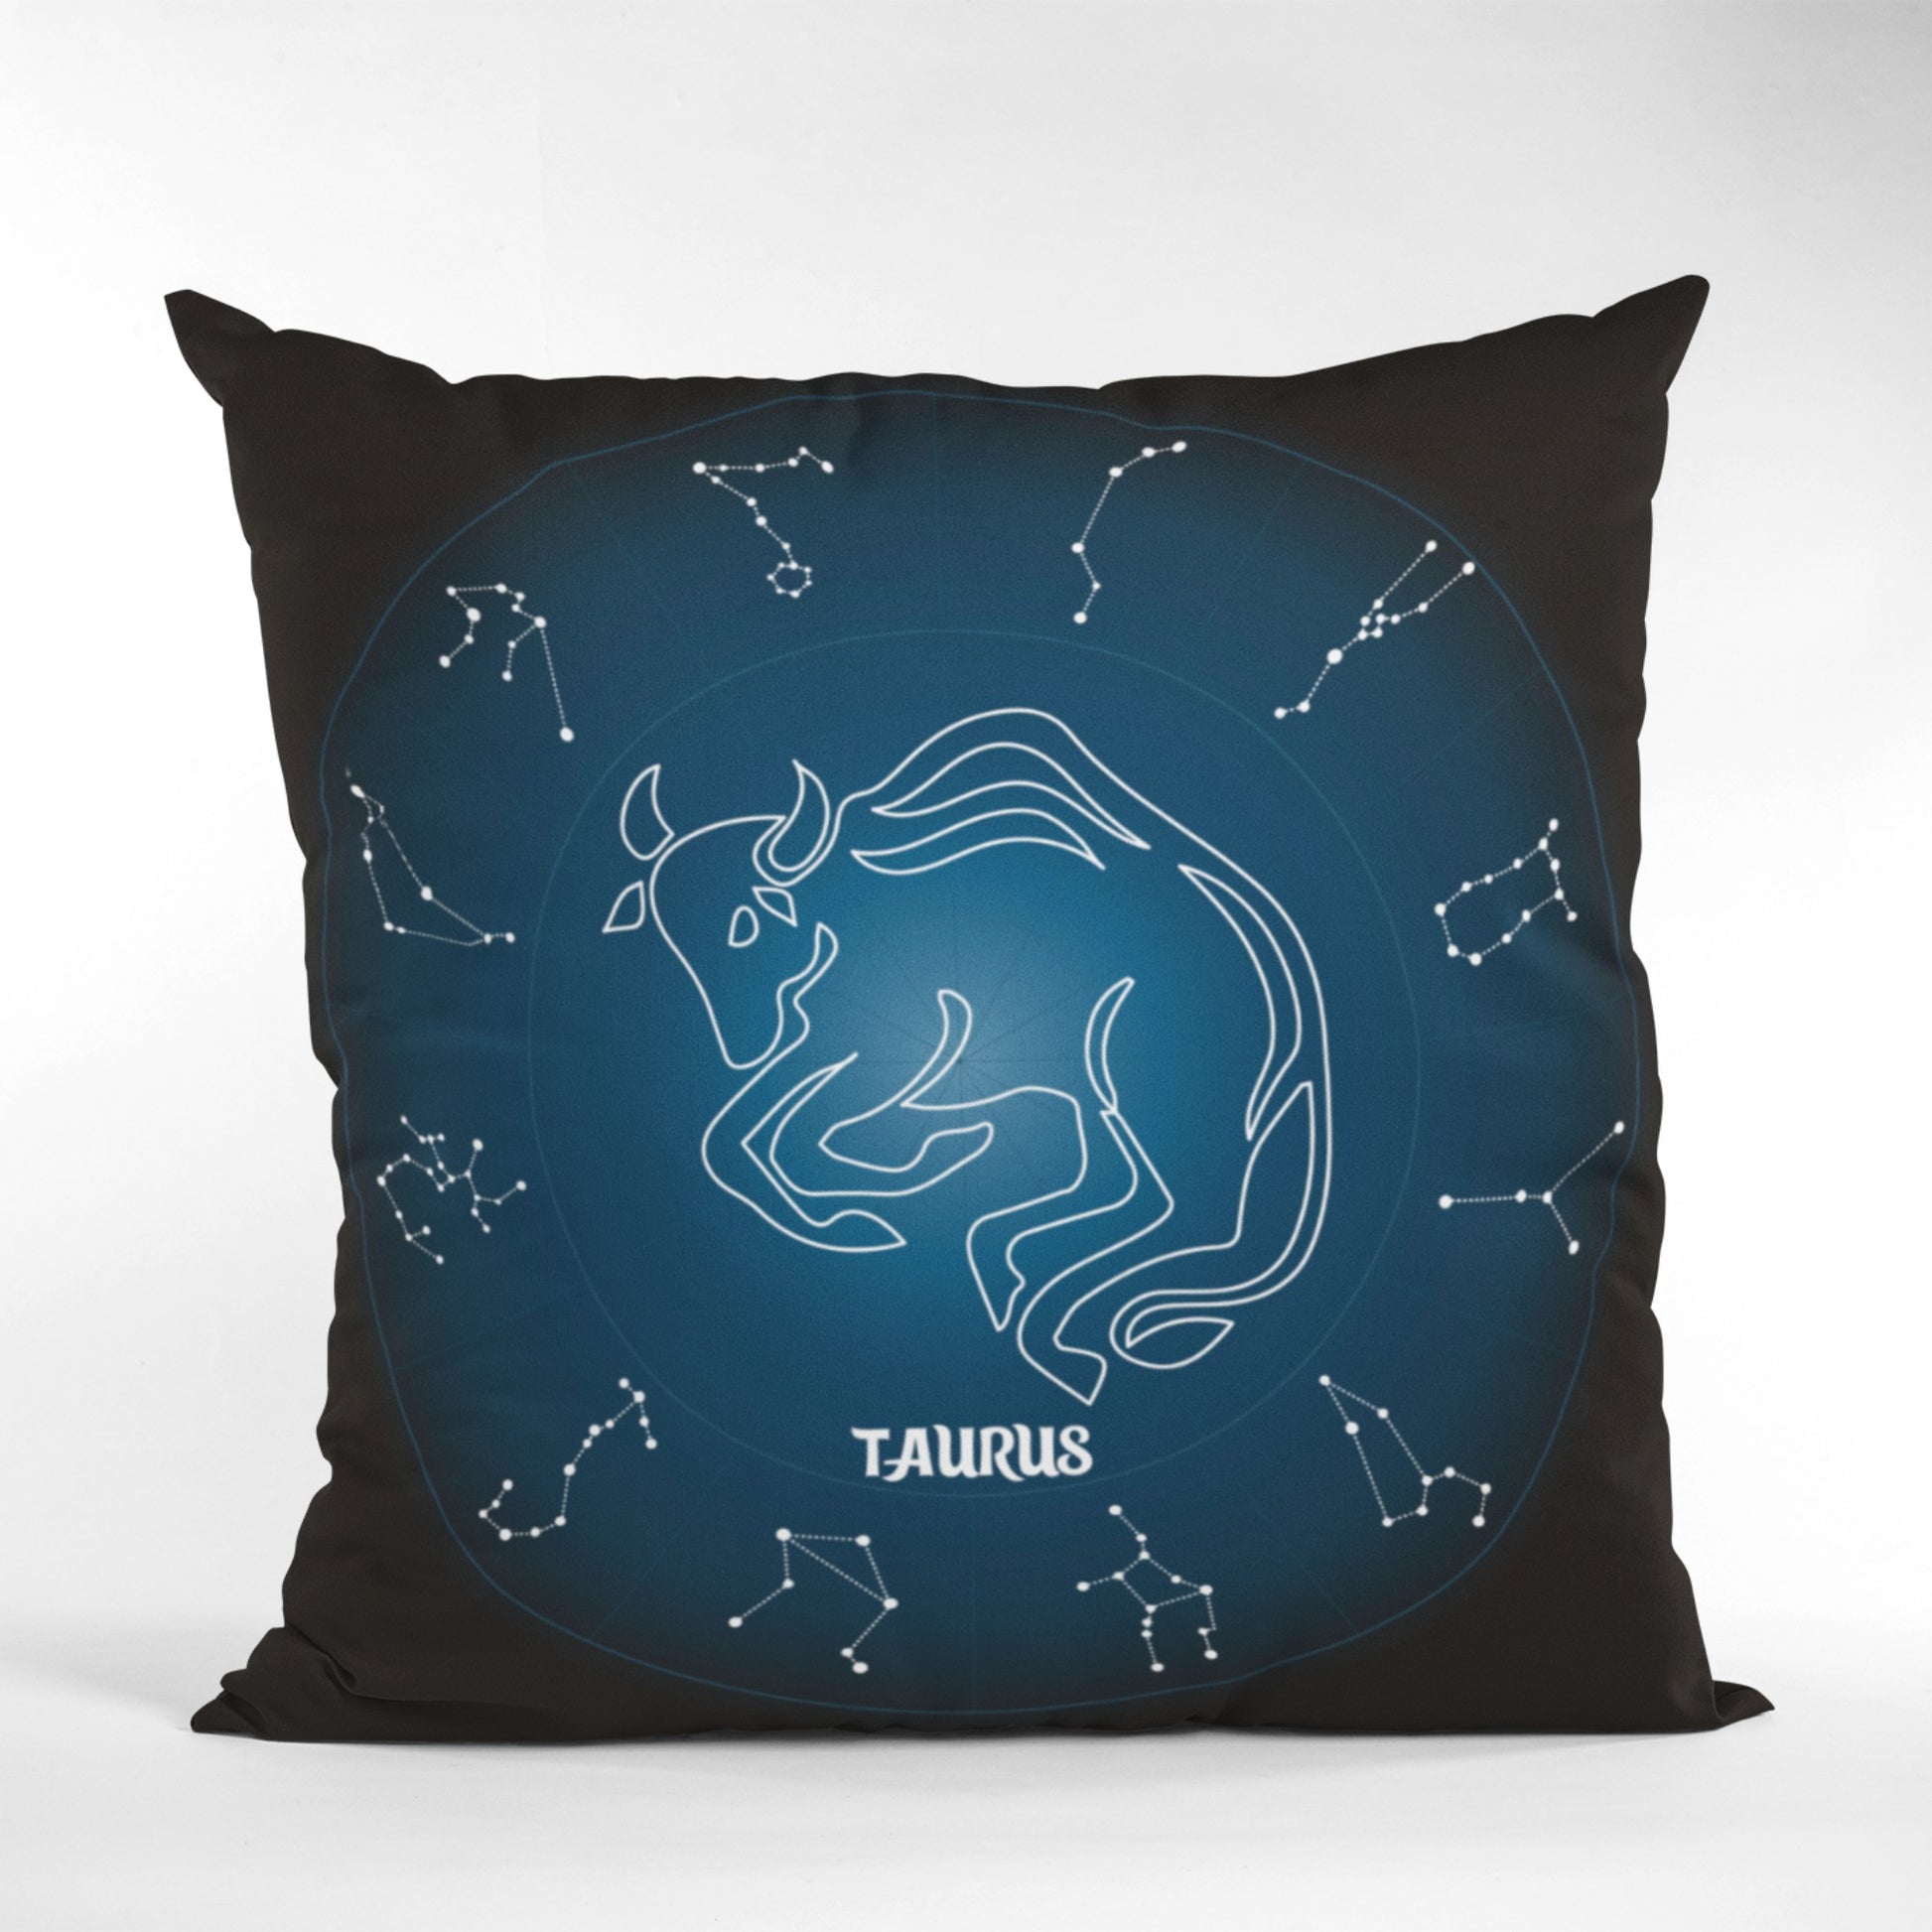 Taurus Horoscope Sign Throw Pillow